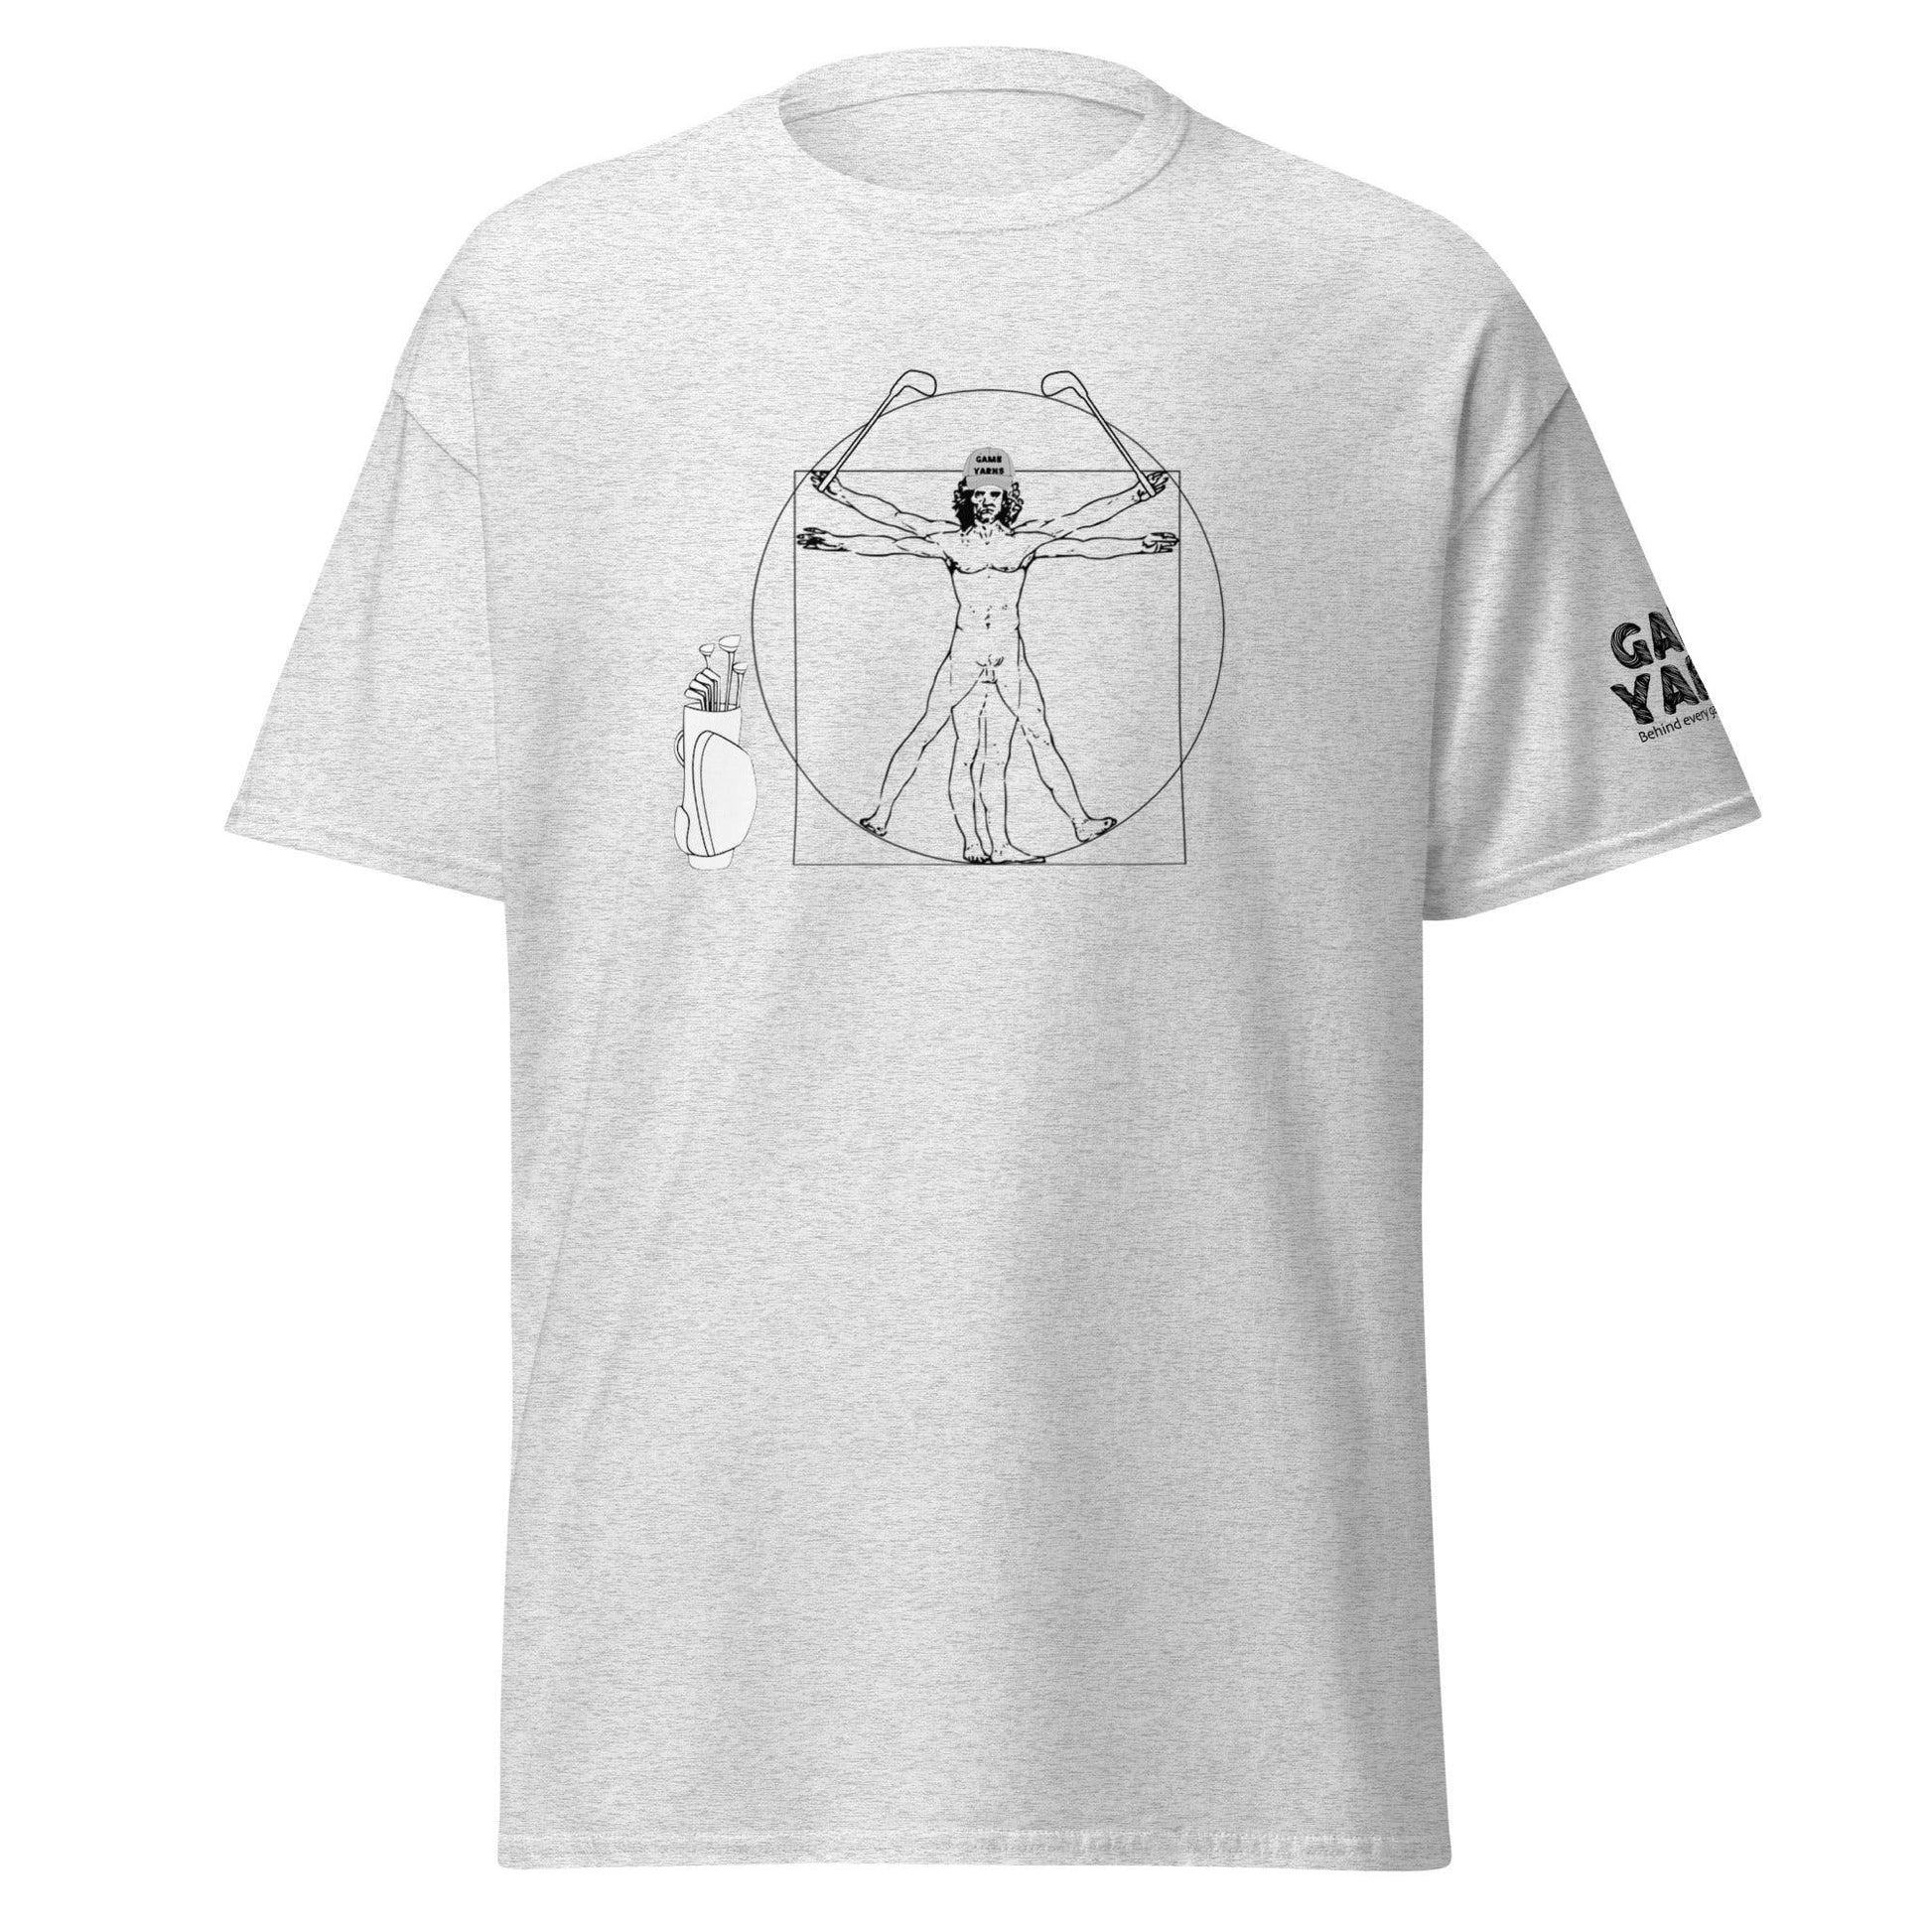 Vitruvian Golfer t-shirt by Game Yarns